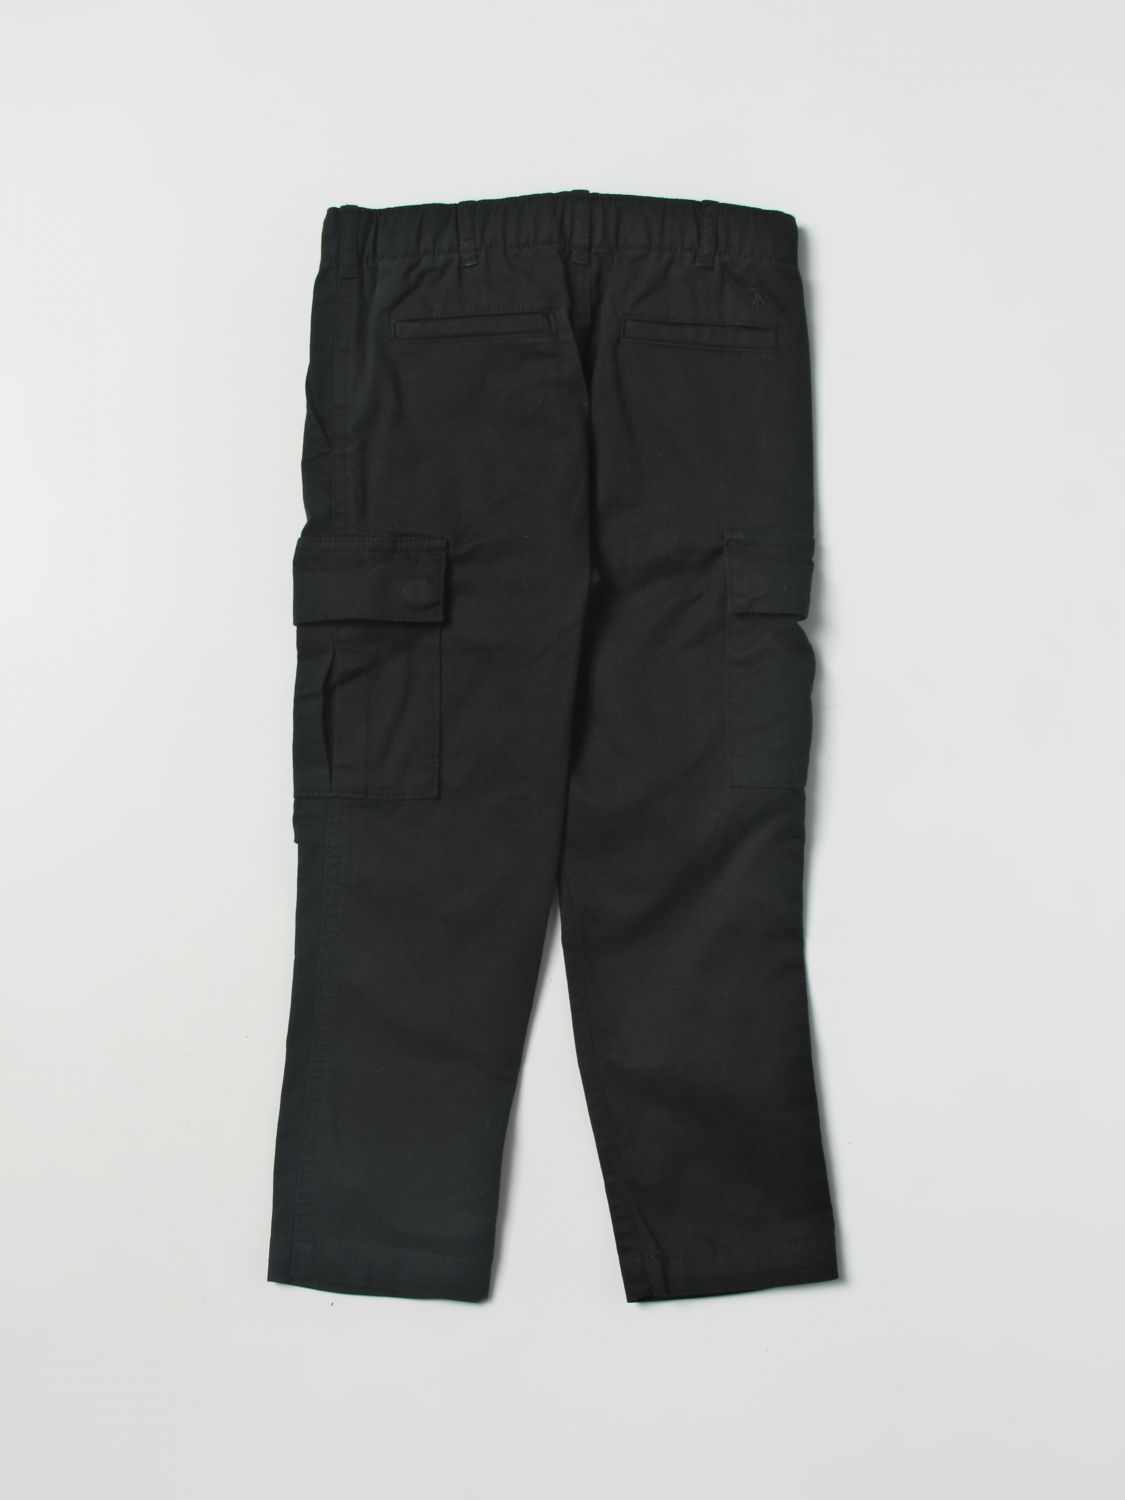 POLO RALPH LAUREN: pants for boys - Black | Polo Ralph Lauren pants  321881716 online on 